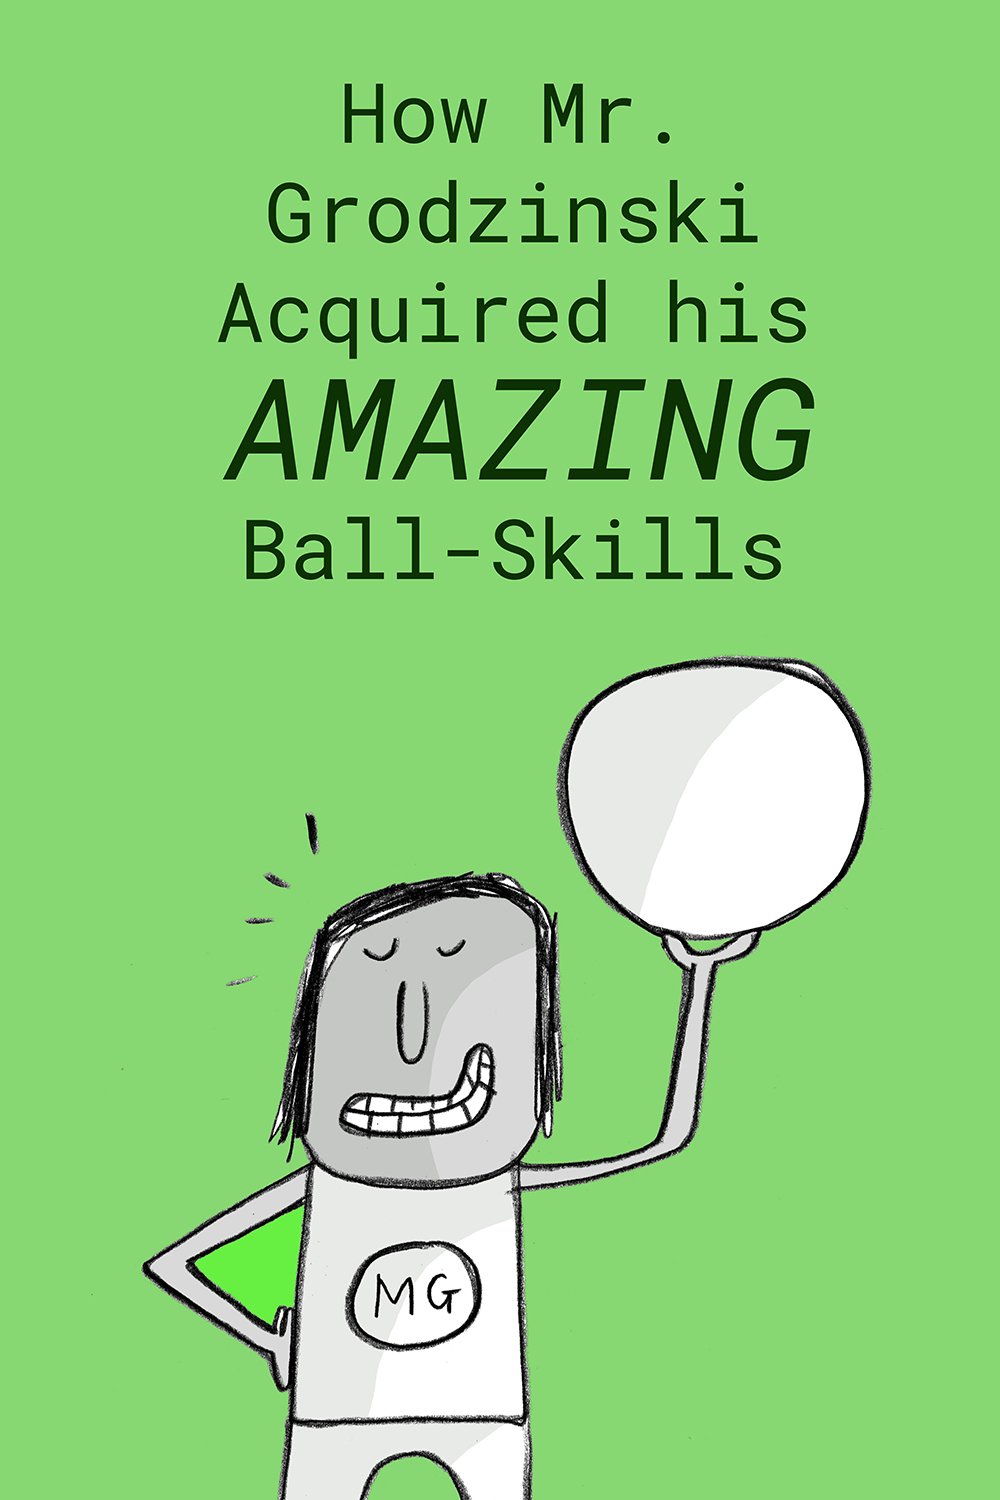 How Mr. Grodzinski Acquired his Amazing Ball Skills